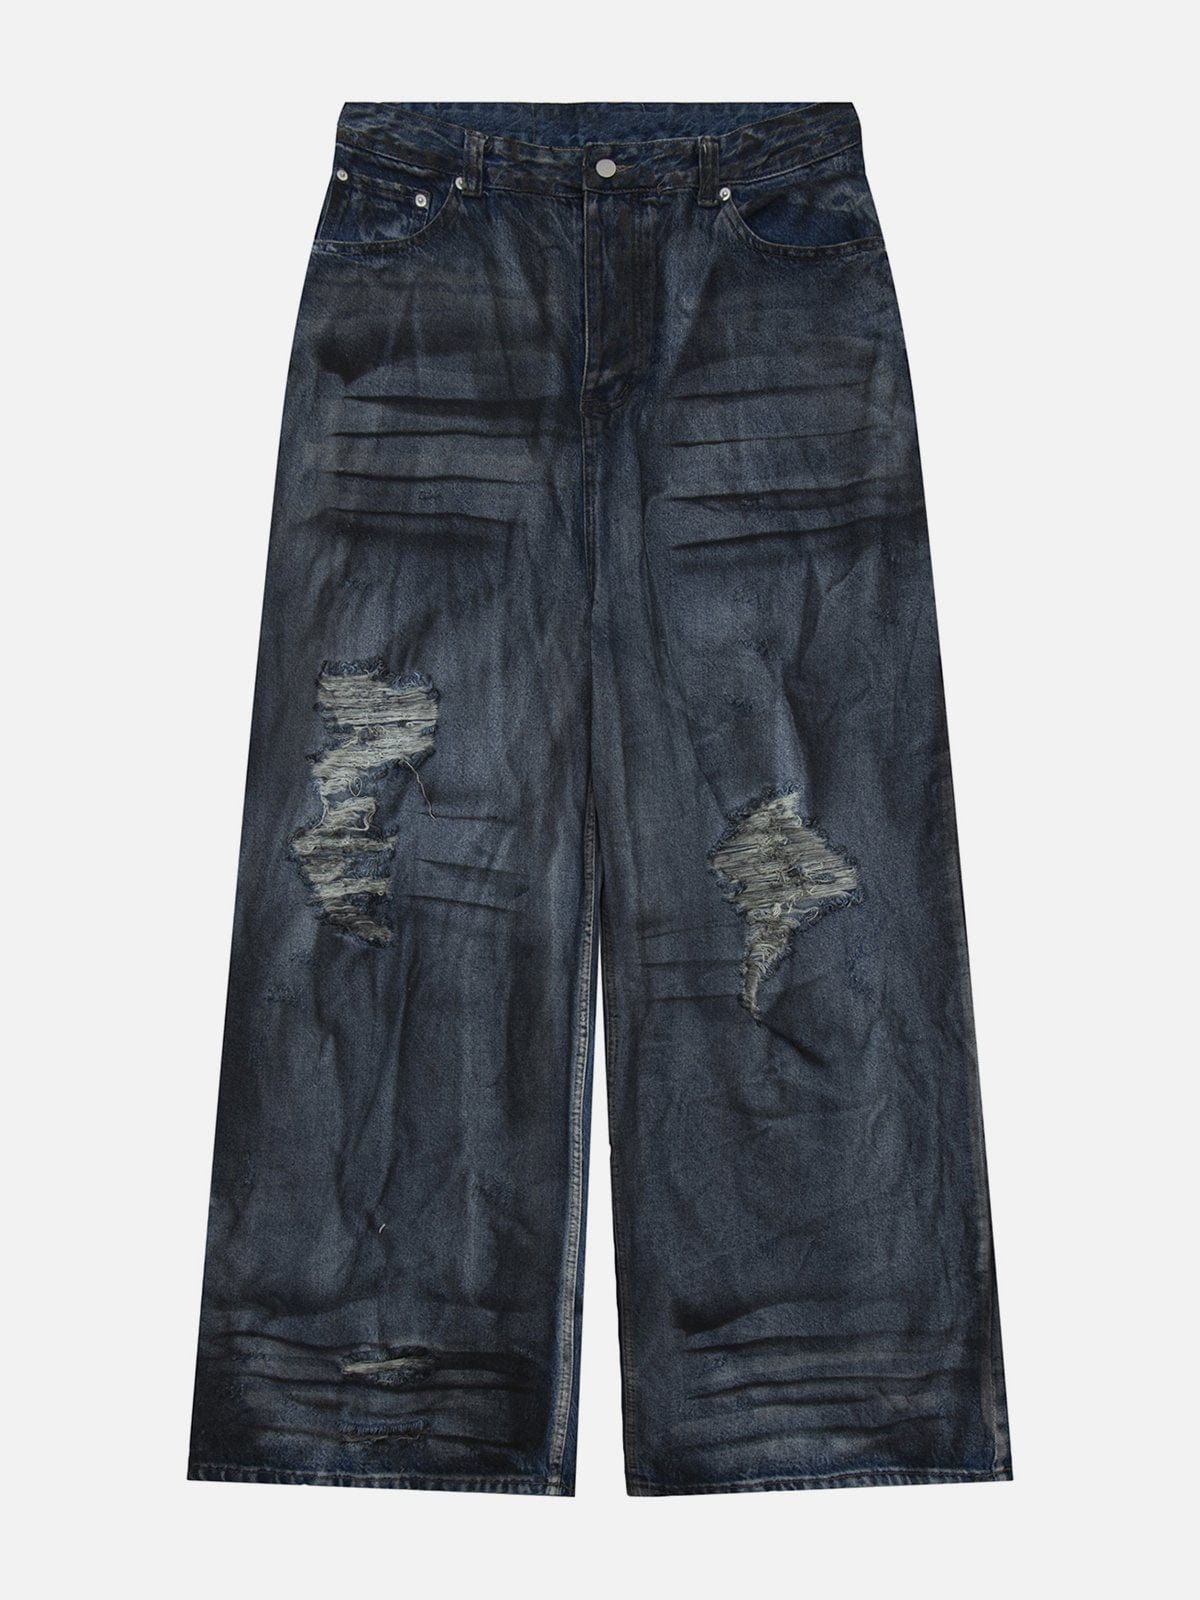 NEV Irregular Holes Pleated Jeans